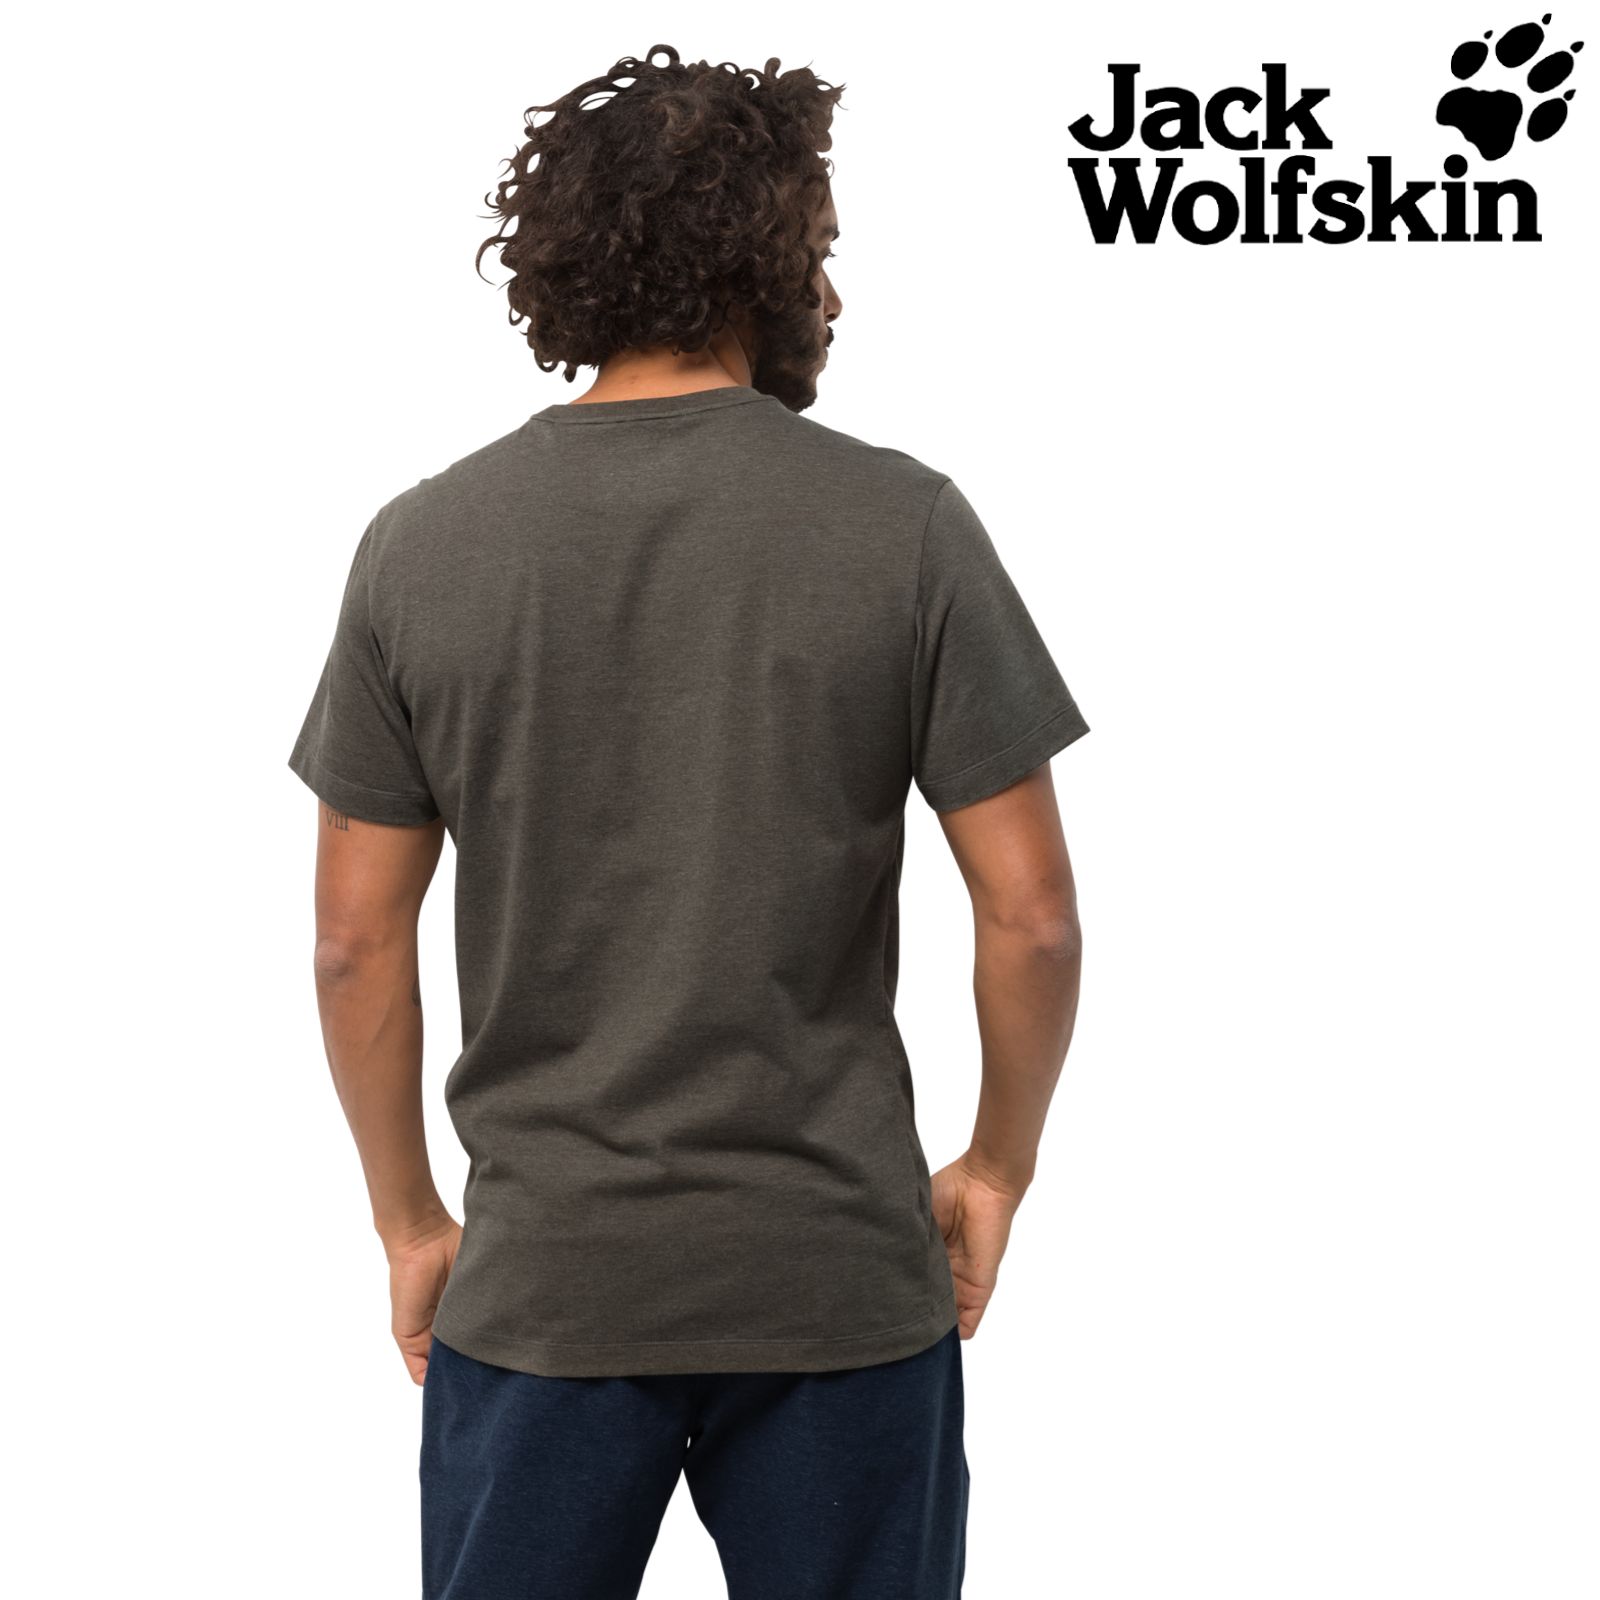 Jack,Wolfskin Mountain T Mens,Short-Sleeve T-shirt Quick-drying Cotton Top